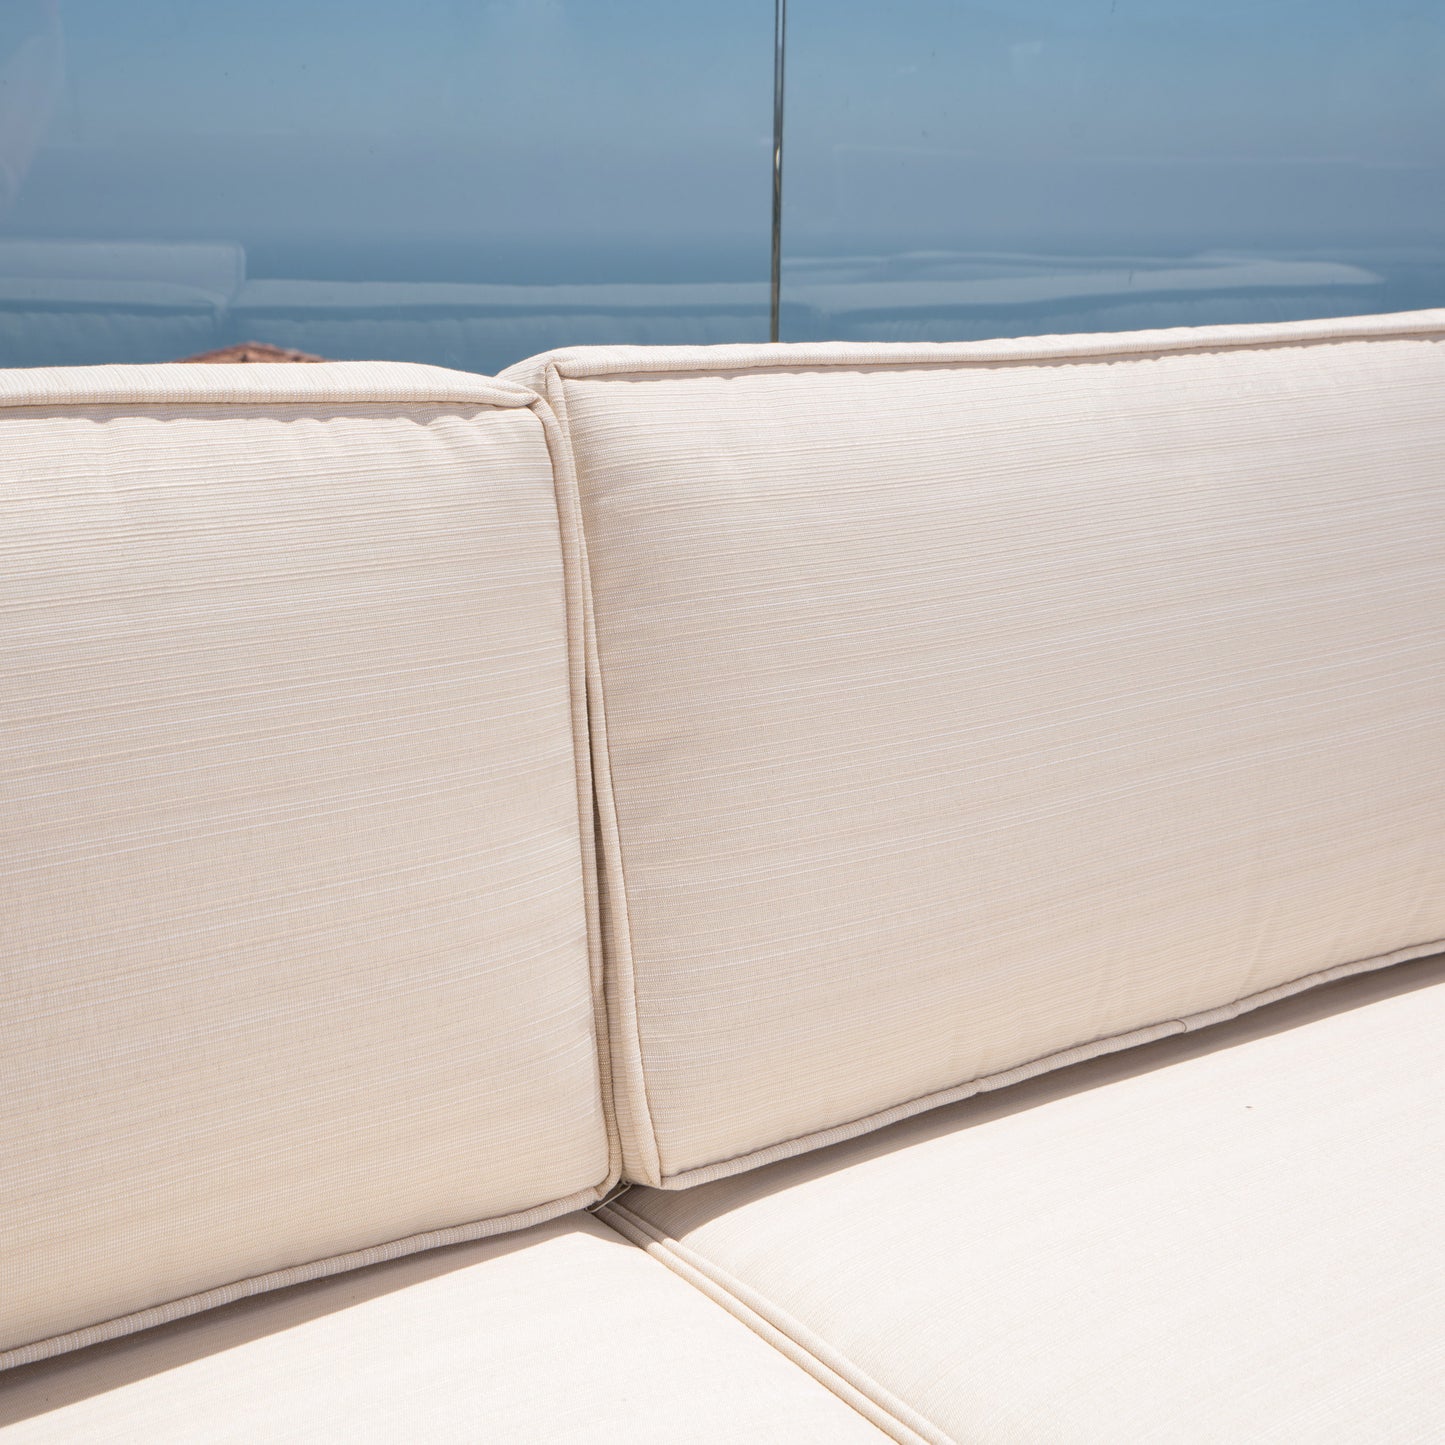 Reddington Outdoor 8 Piece Wicker Sofa Set with Water Resistant Cushions